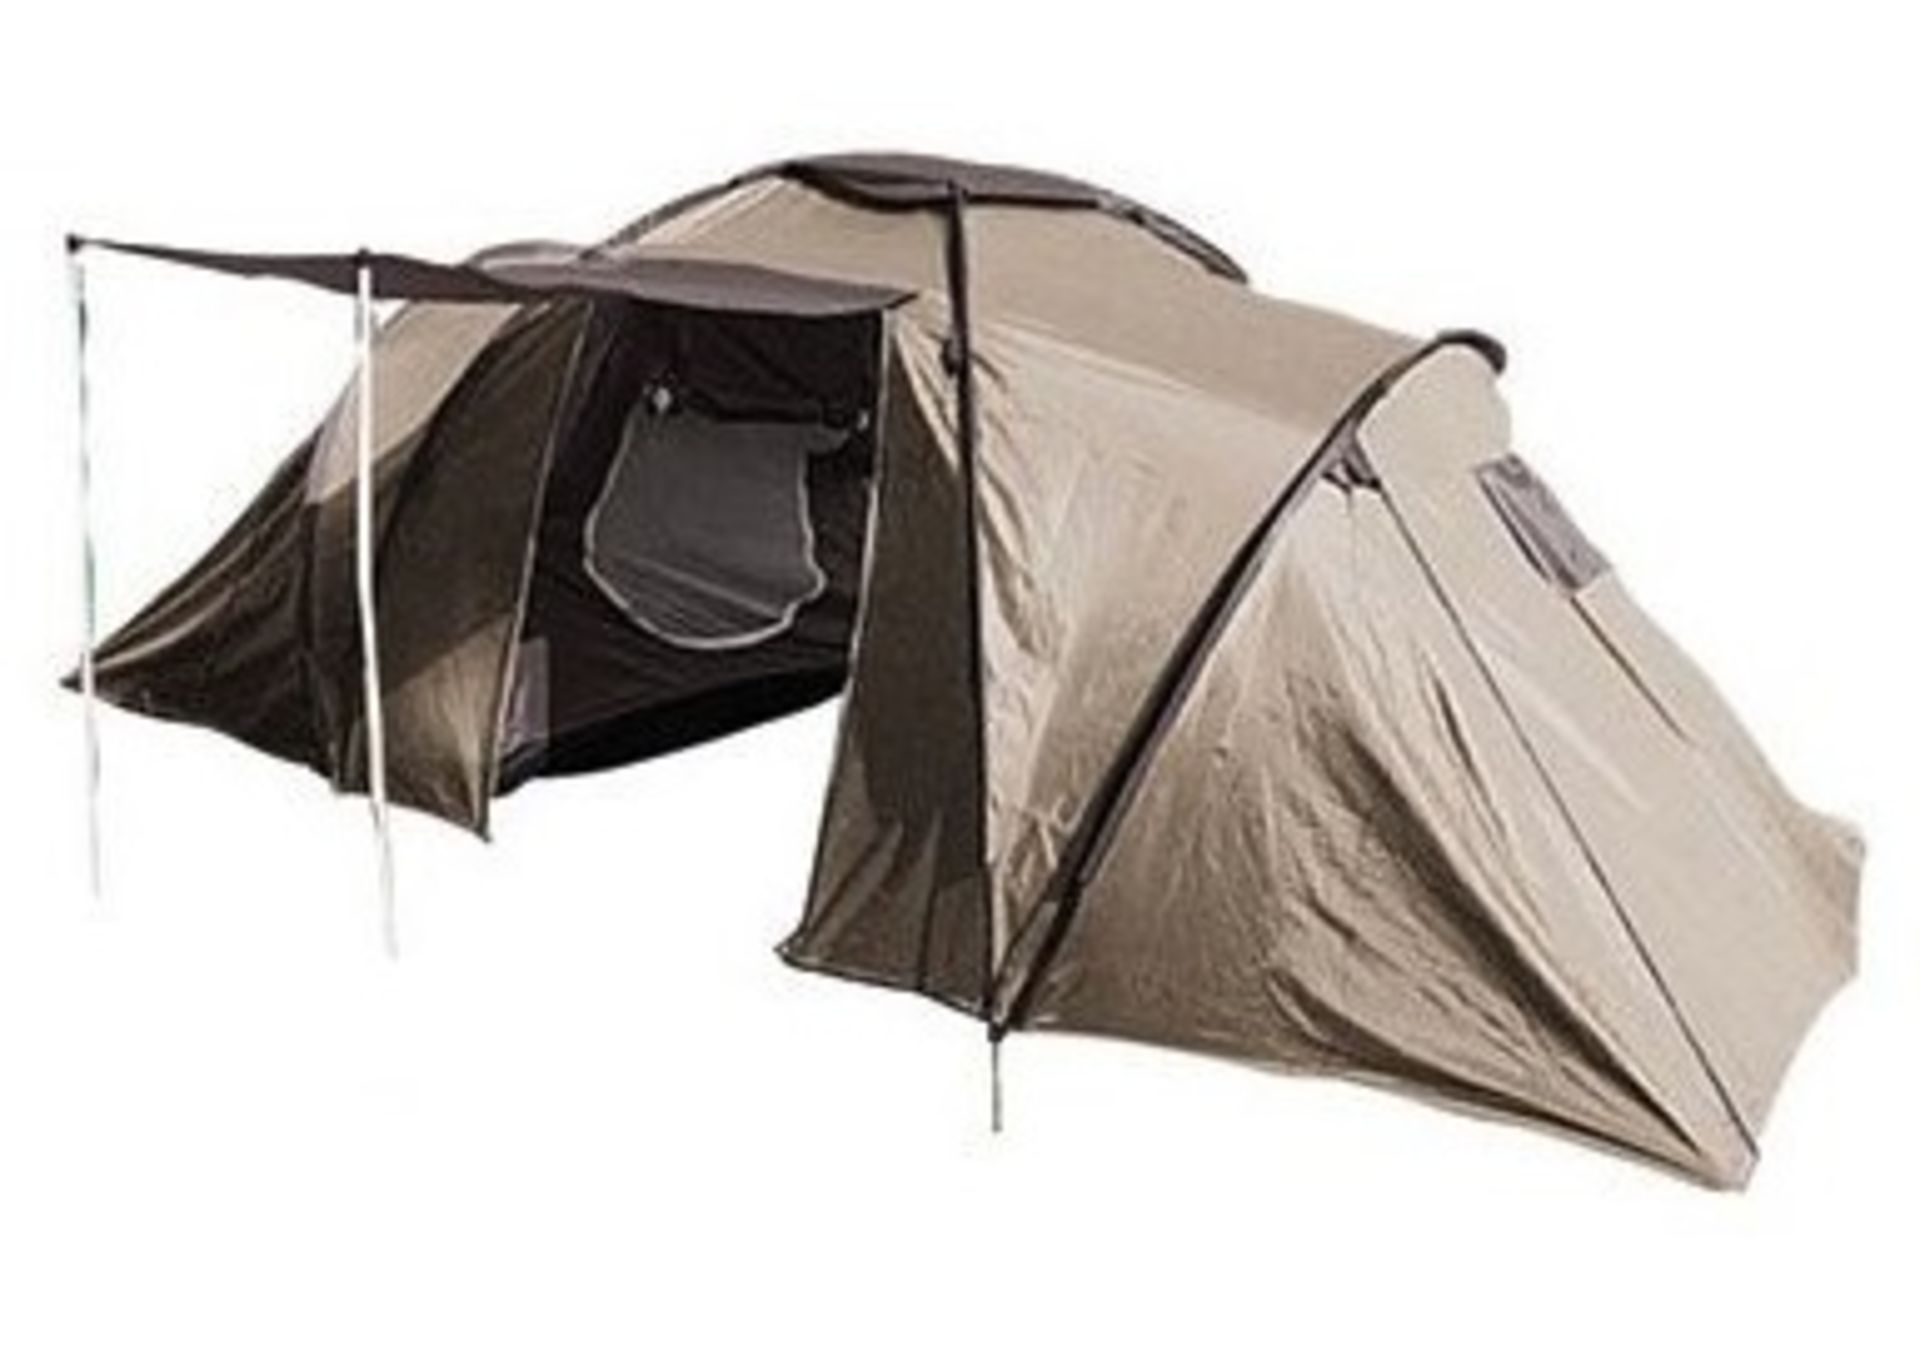 1 x Redcliffs Longwood Large 4-Man Family Tent - Colour: Brown - 2 Room / 2 Entrances -  Brand New